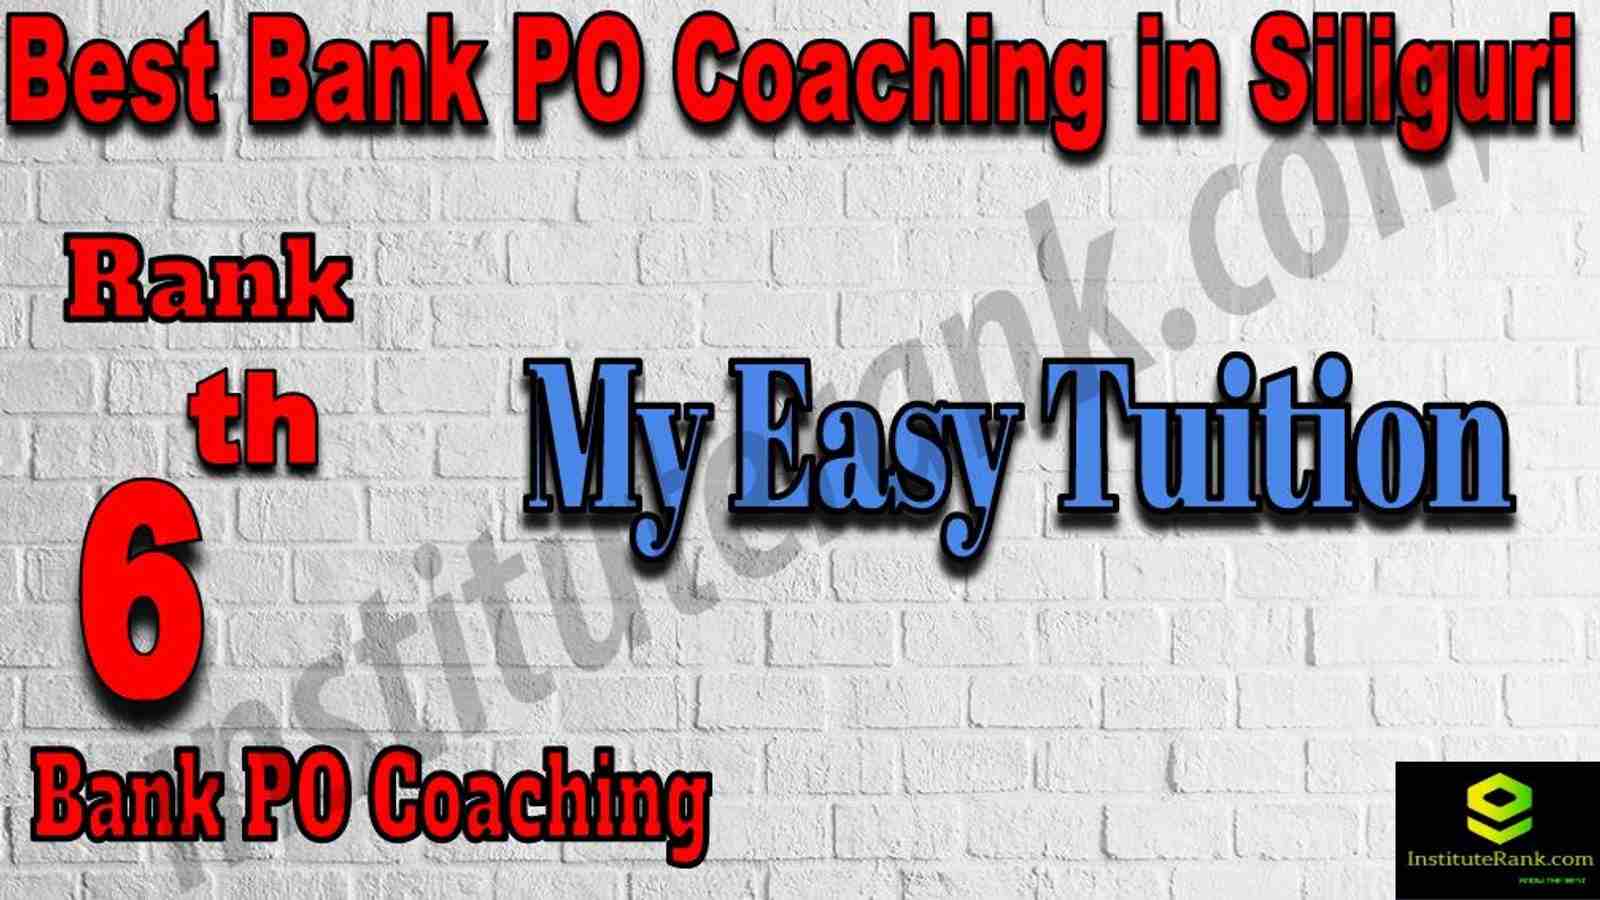 6th Best Bank PO Coaching in Siliguri